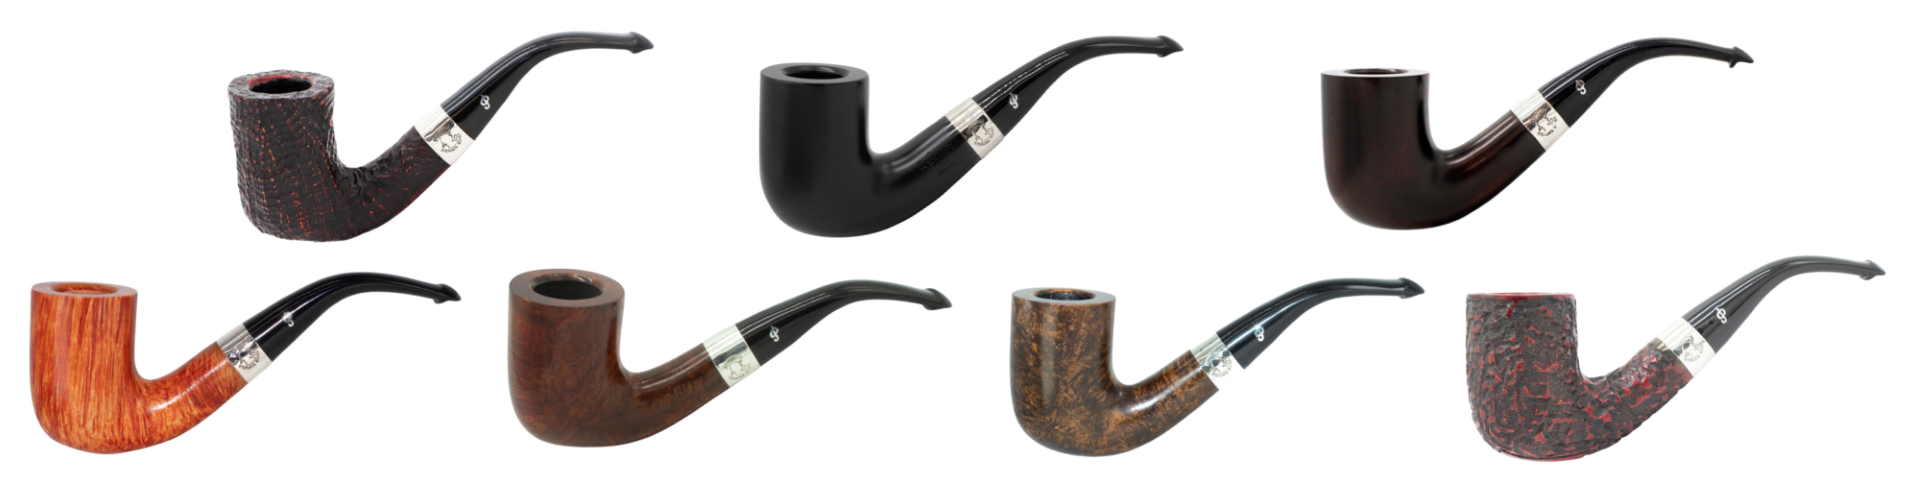 Peterson Sherlock Holmes Rathbone Tobacco Pipe